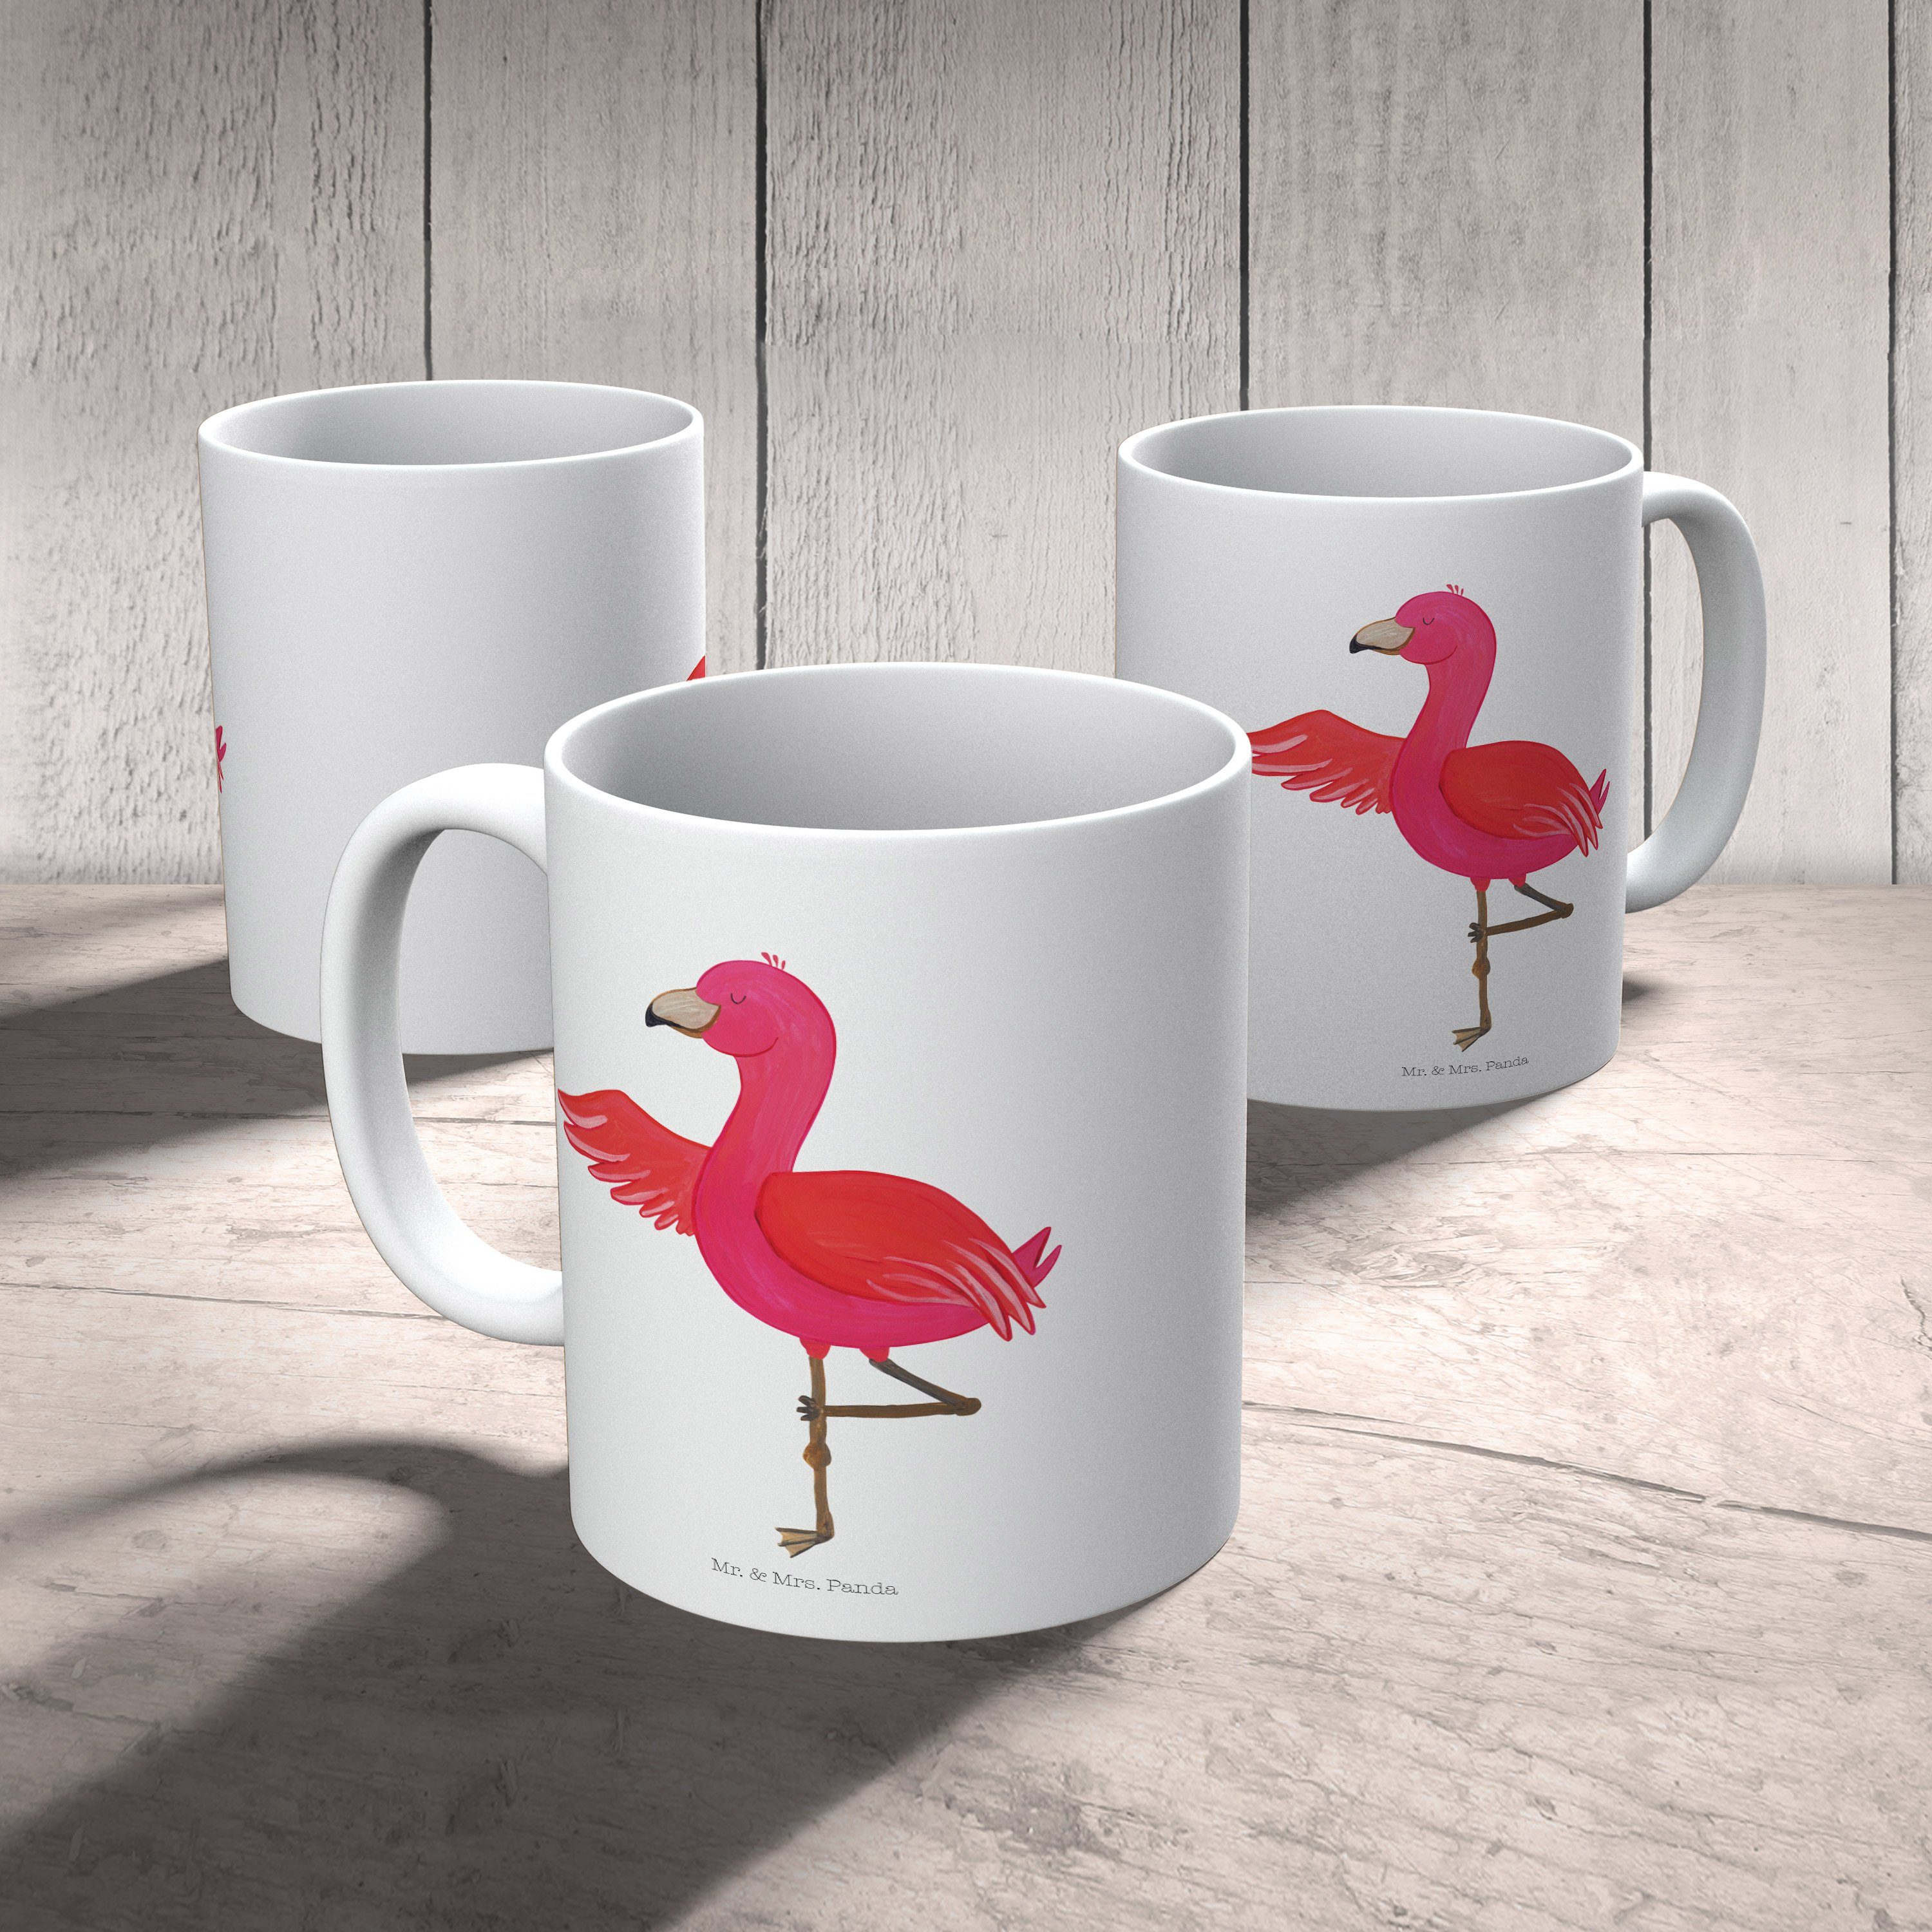 Mr. & - Yoga Keramik Flamingo Panda - Entspannung, Weiß Urlaub, Mrs. Tasse, Yoga Tee, Tasse Geschenk